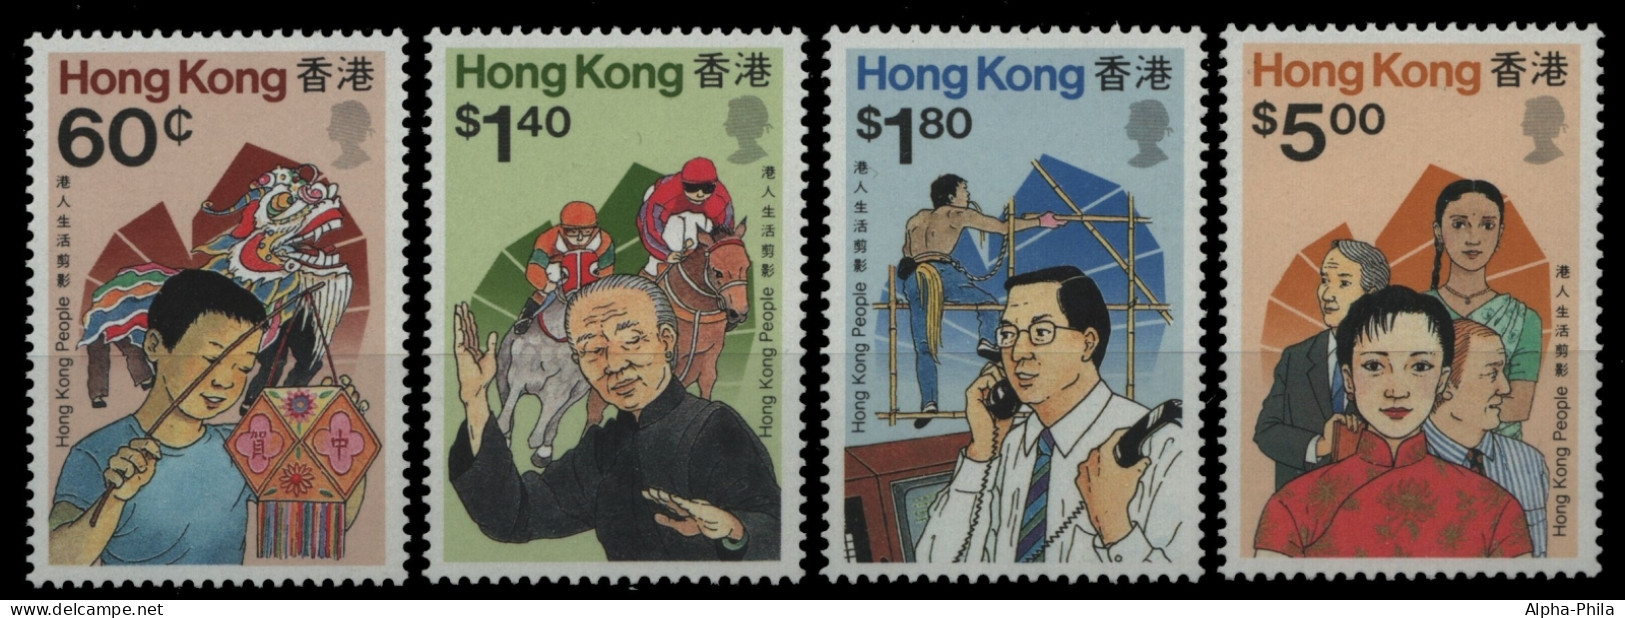 Hongkong 1989 - Mi-Nr. 567-570 ** - MNH - Leben In Hongkong - Ongebruikt